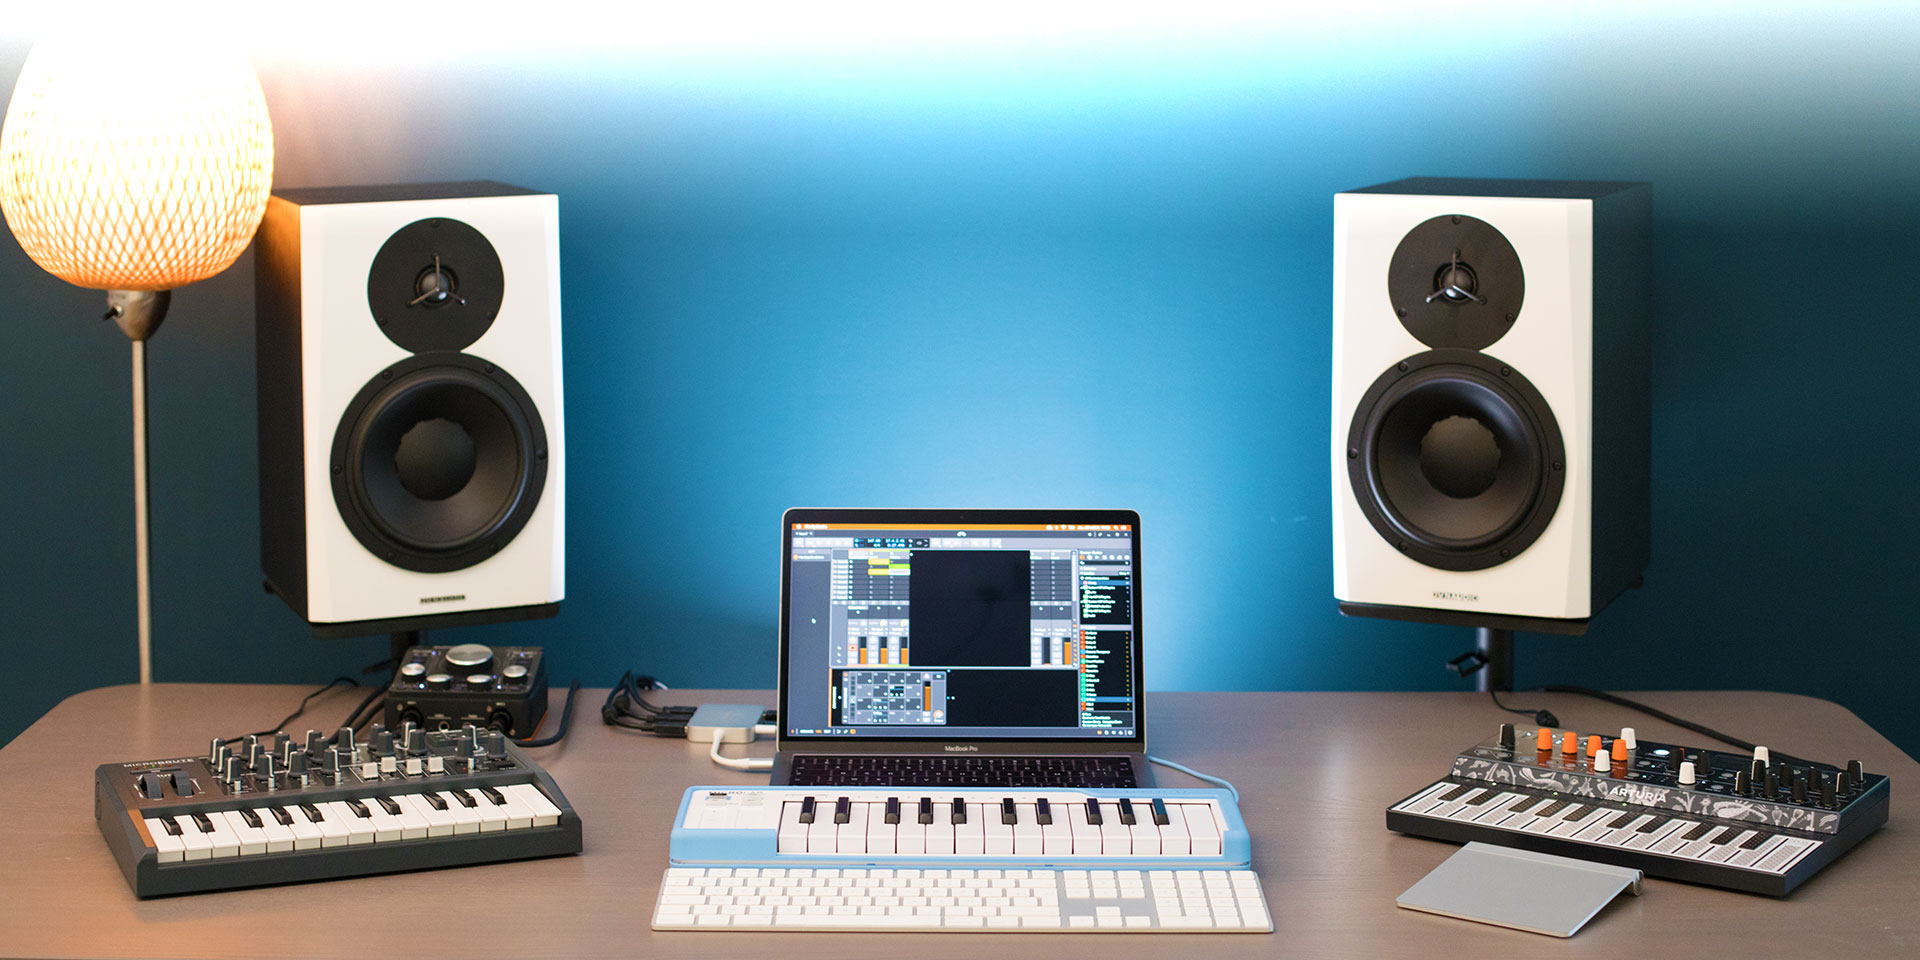 led keyboards for mac desktop in recording studio